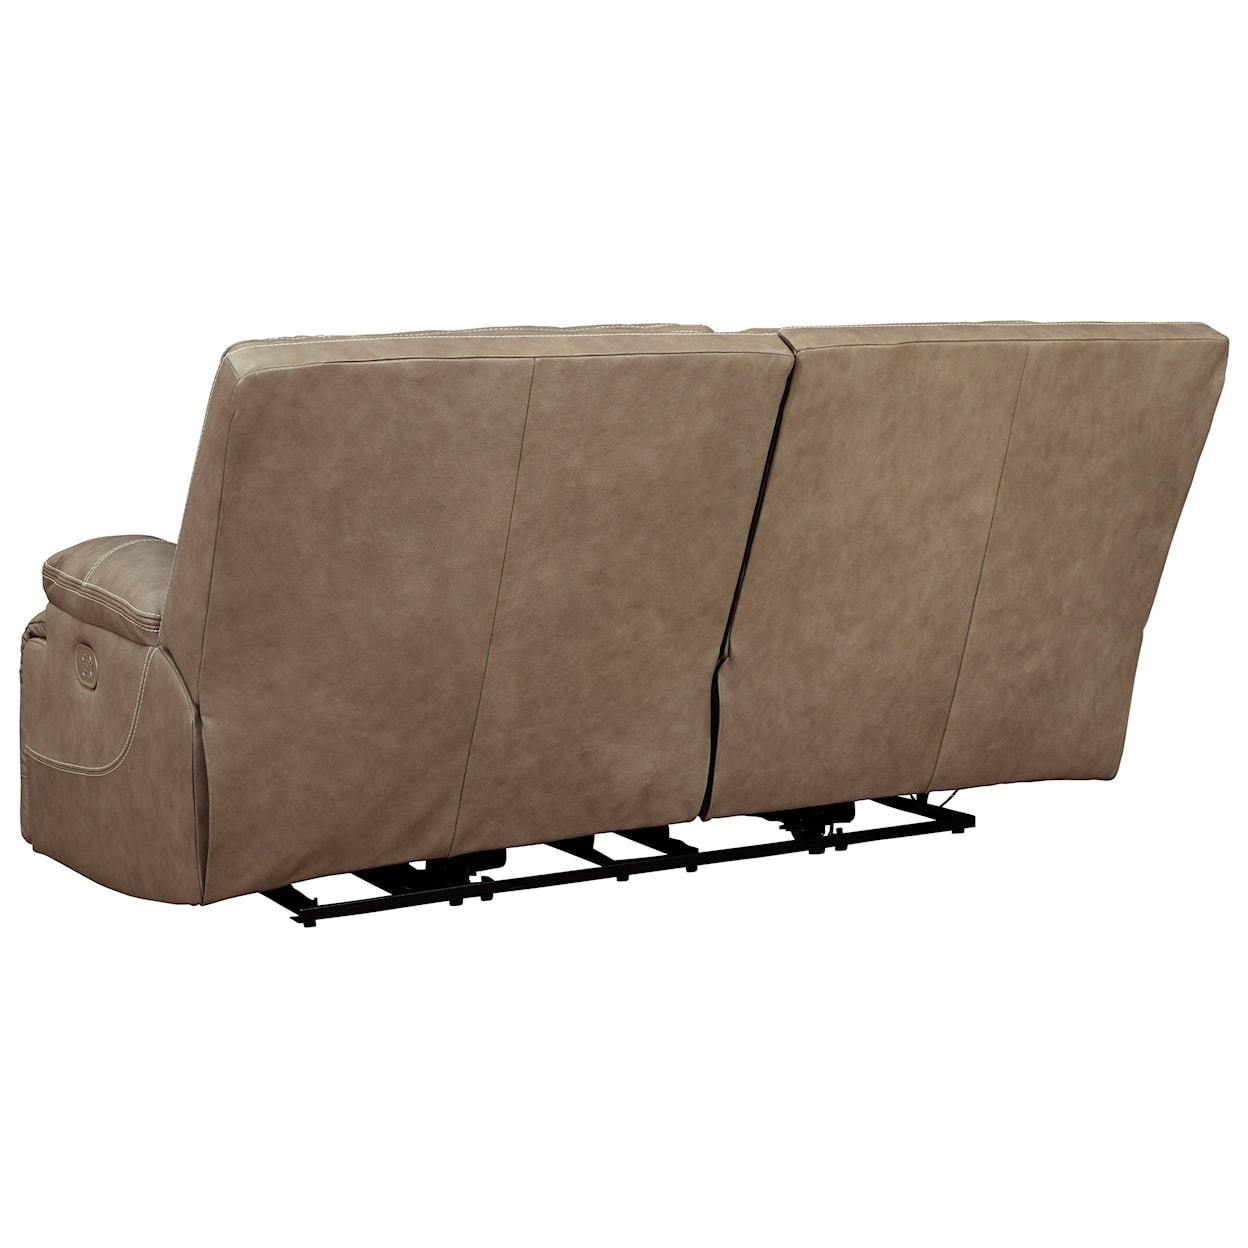 Signature Design Ricmen 2-Seat Power Reclining Sofa w/ Adj Headrests